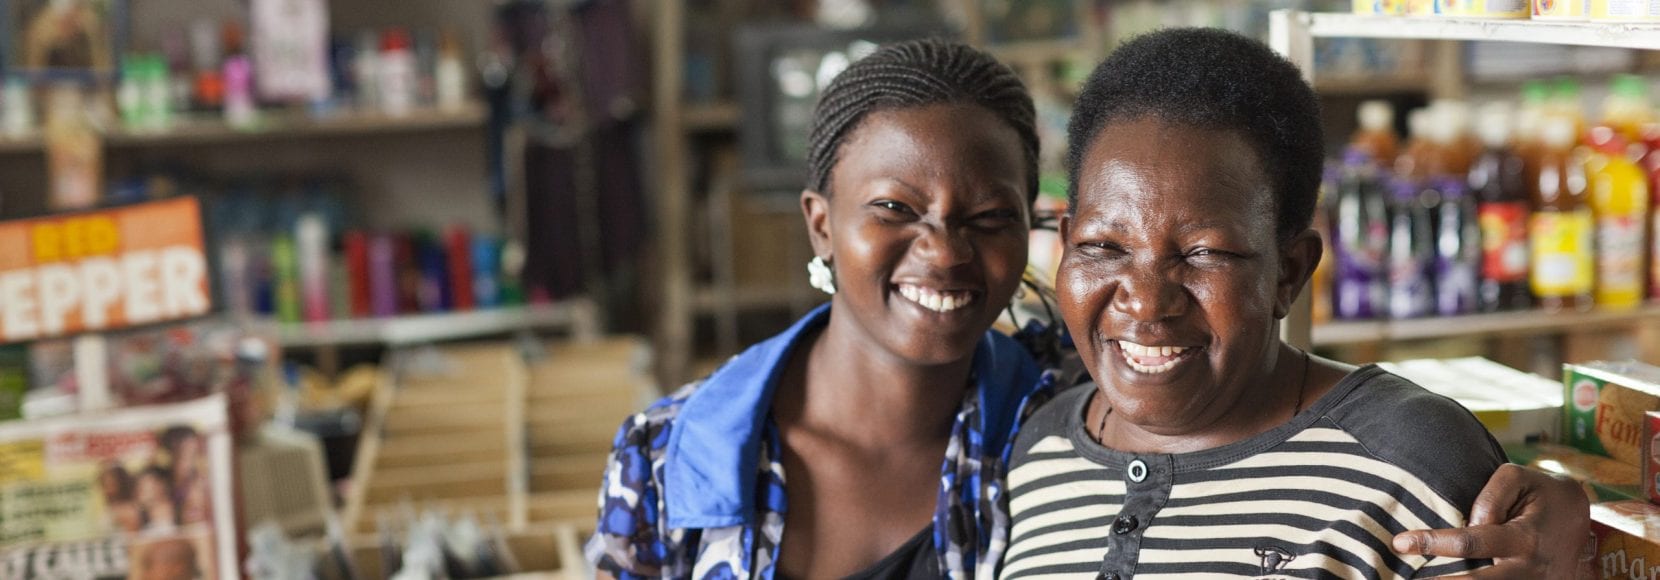 Two smiling women in grocery store in Uganda